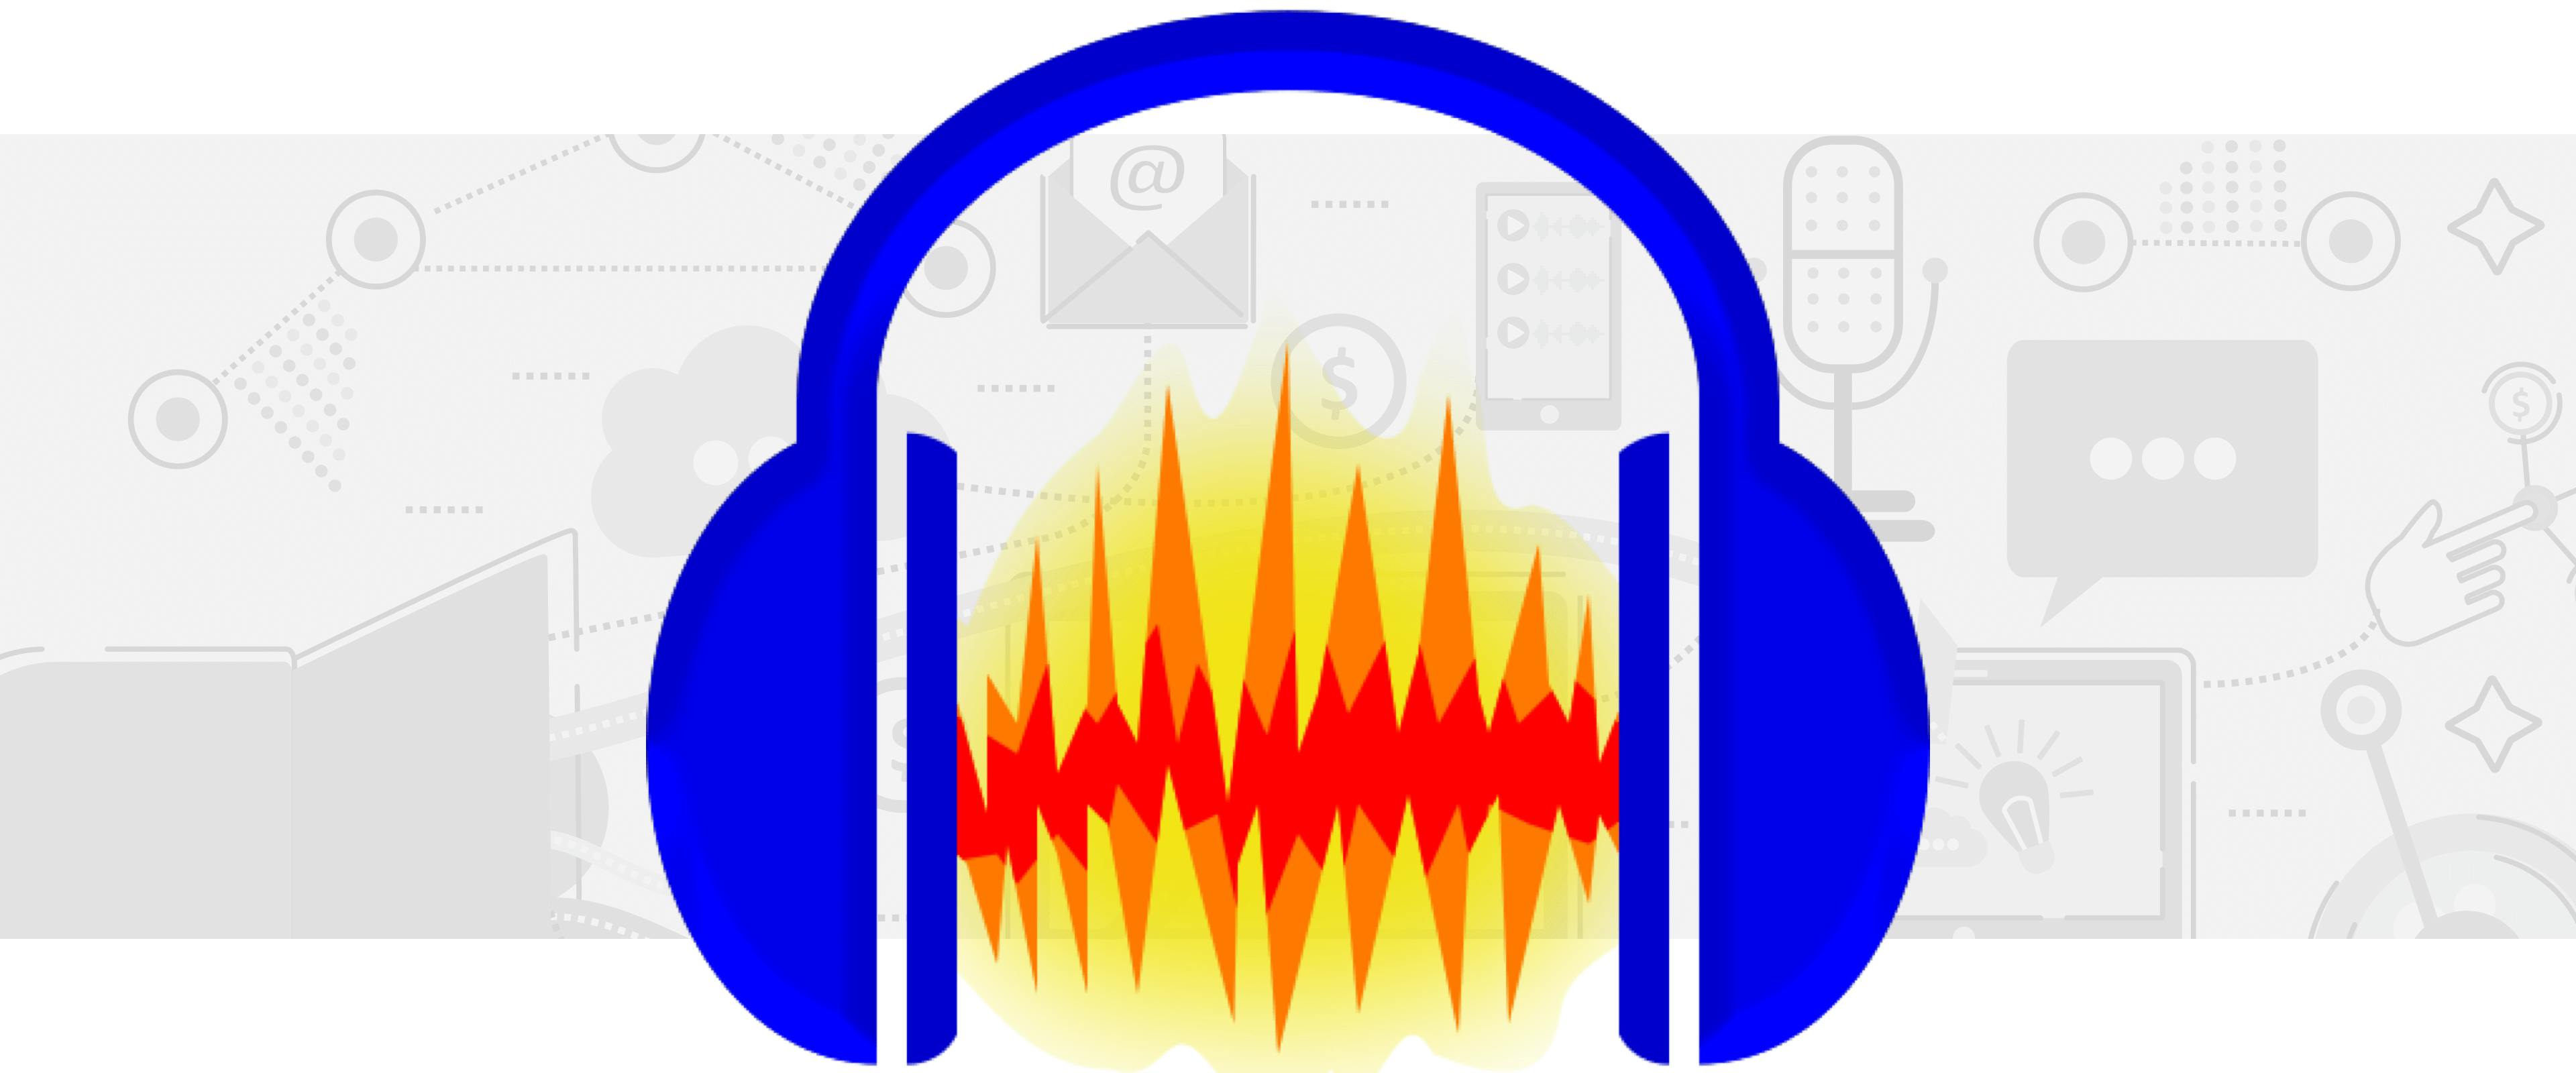 Audacity icon with blue headphones and waveform